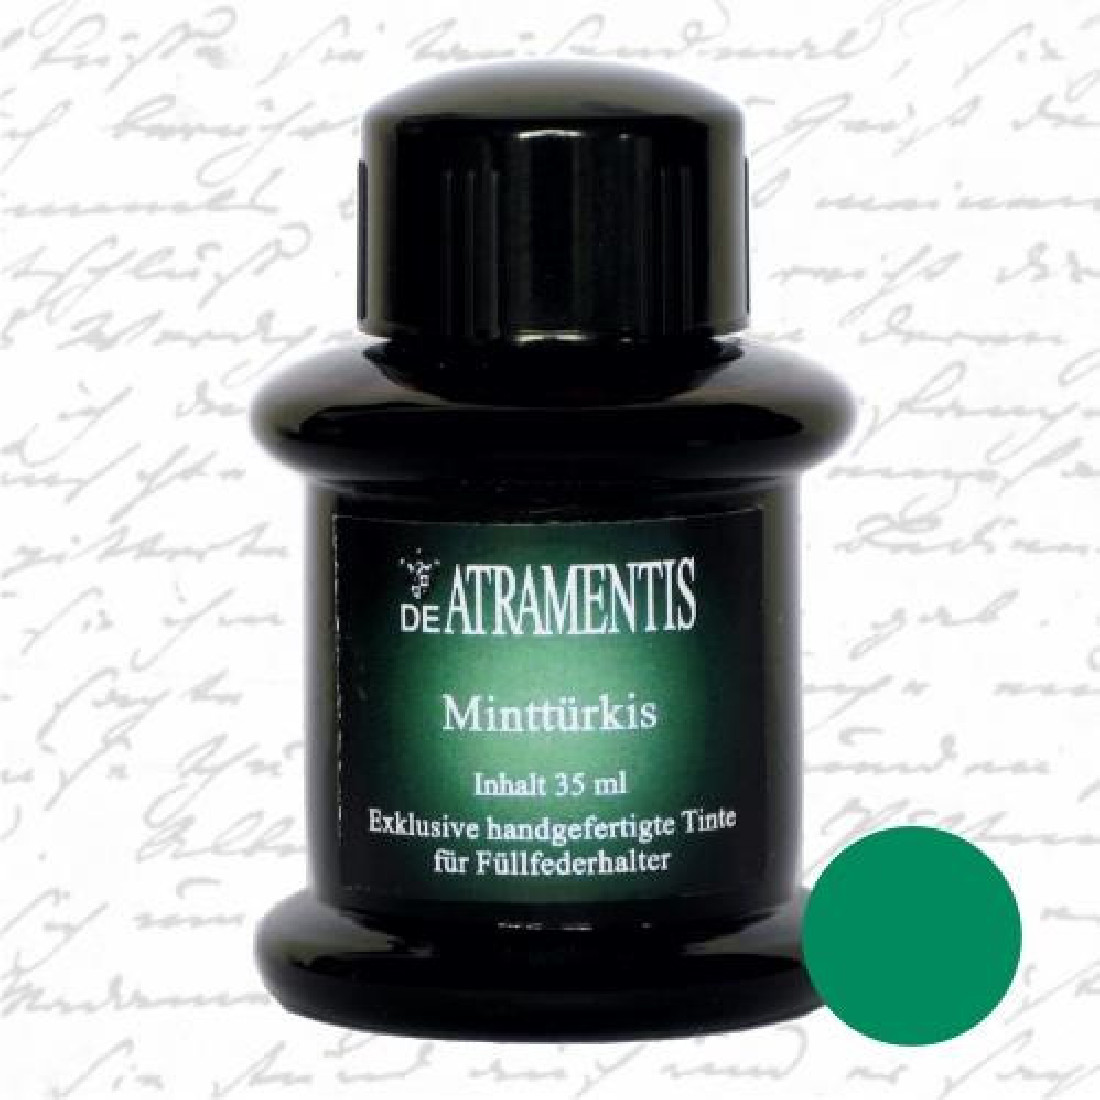 De Atramentis Mint Turquoise 45ml fountain pen standard ink